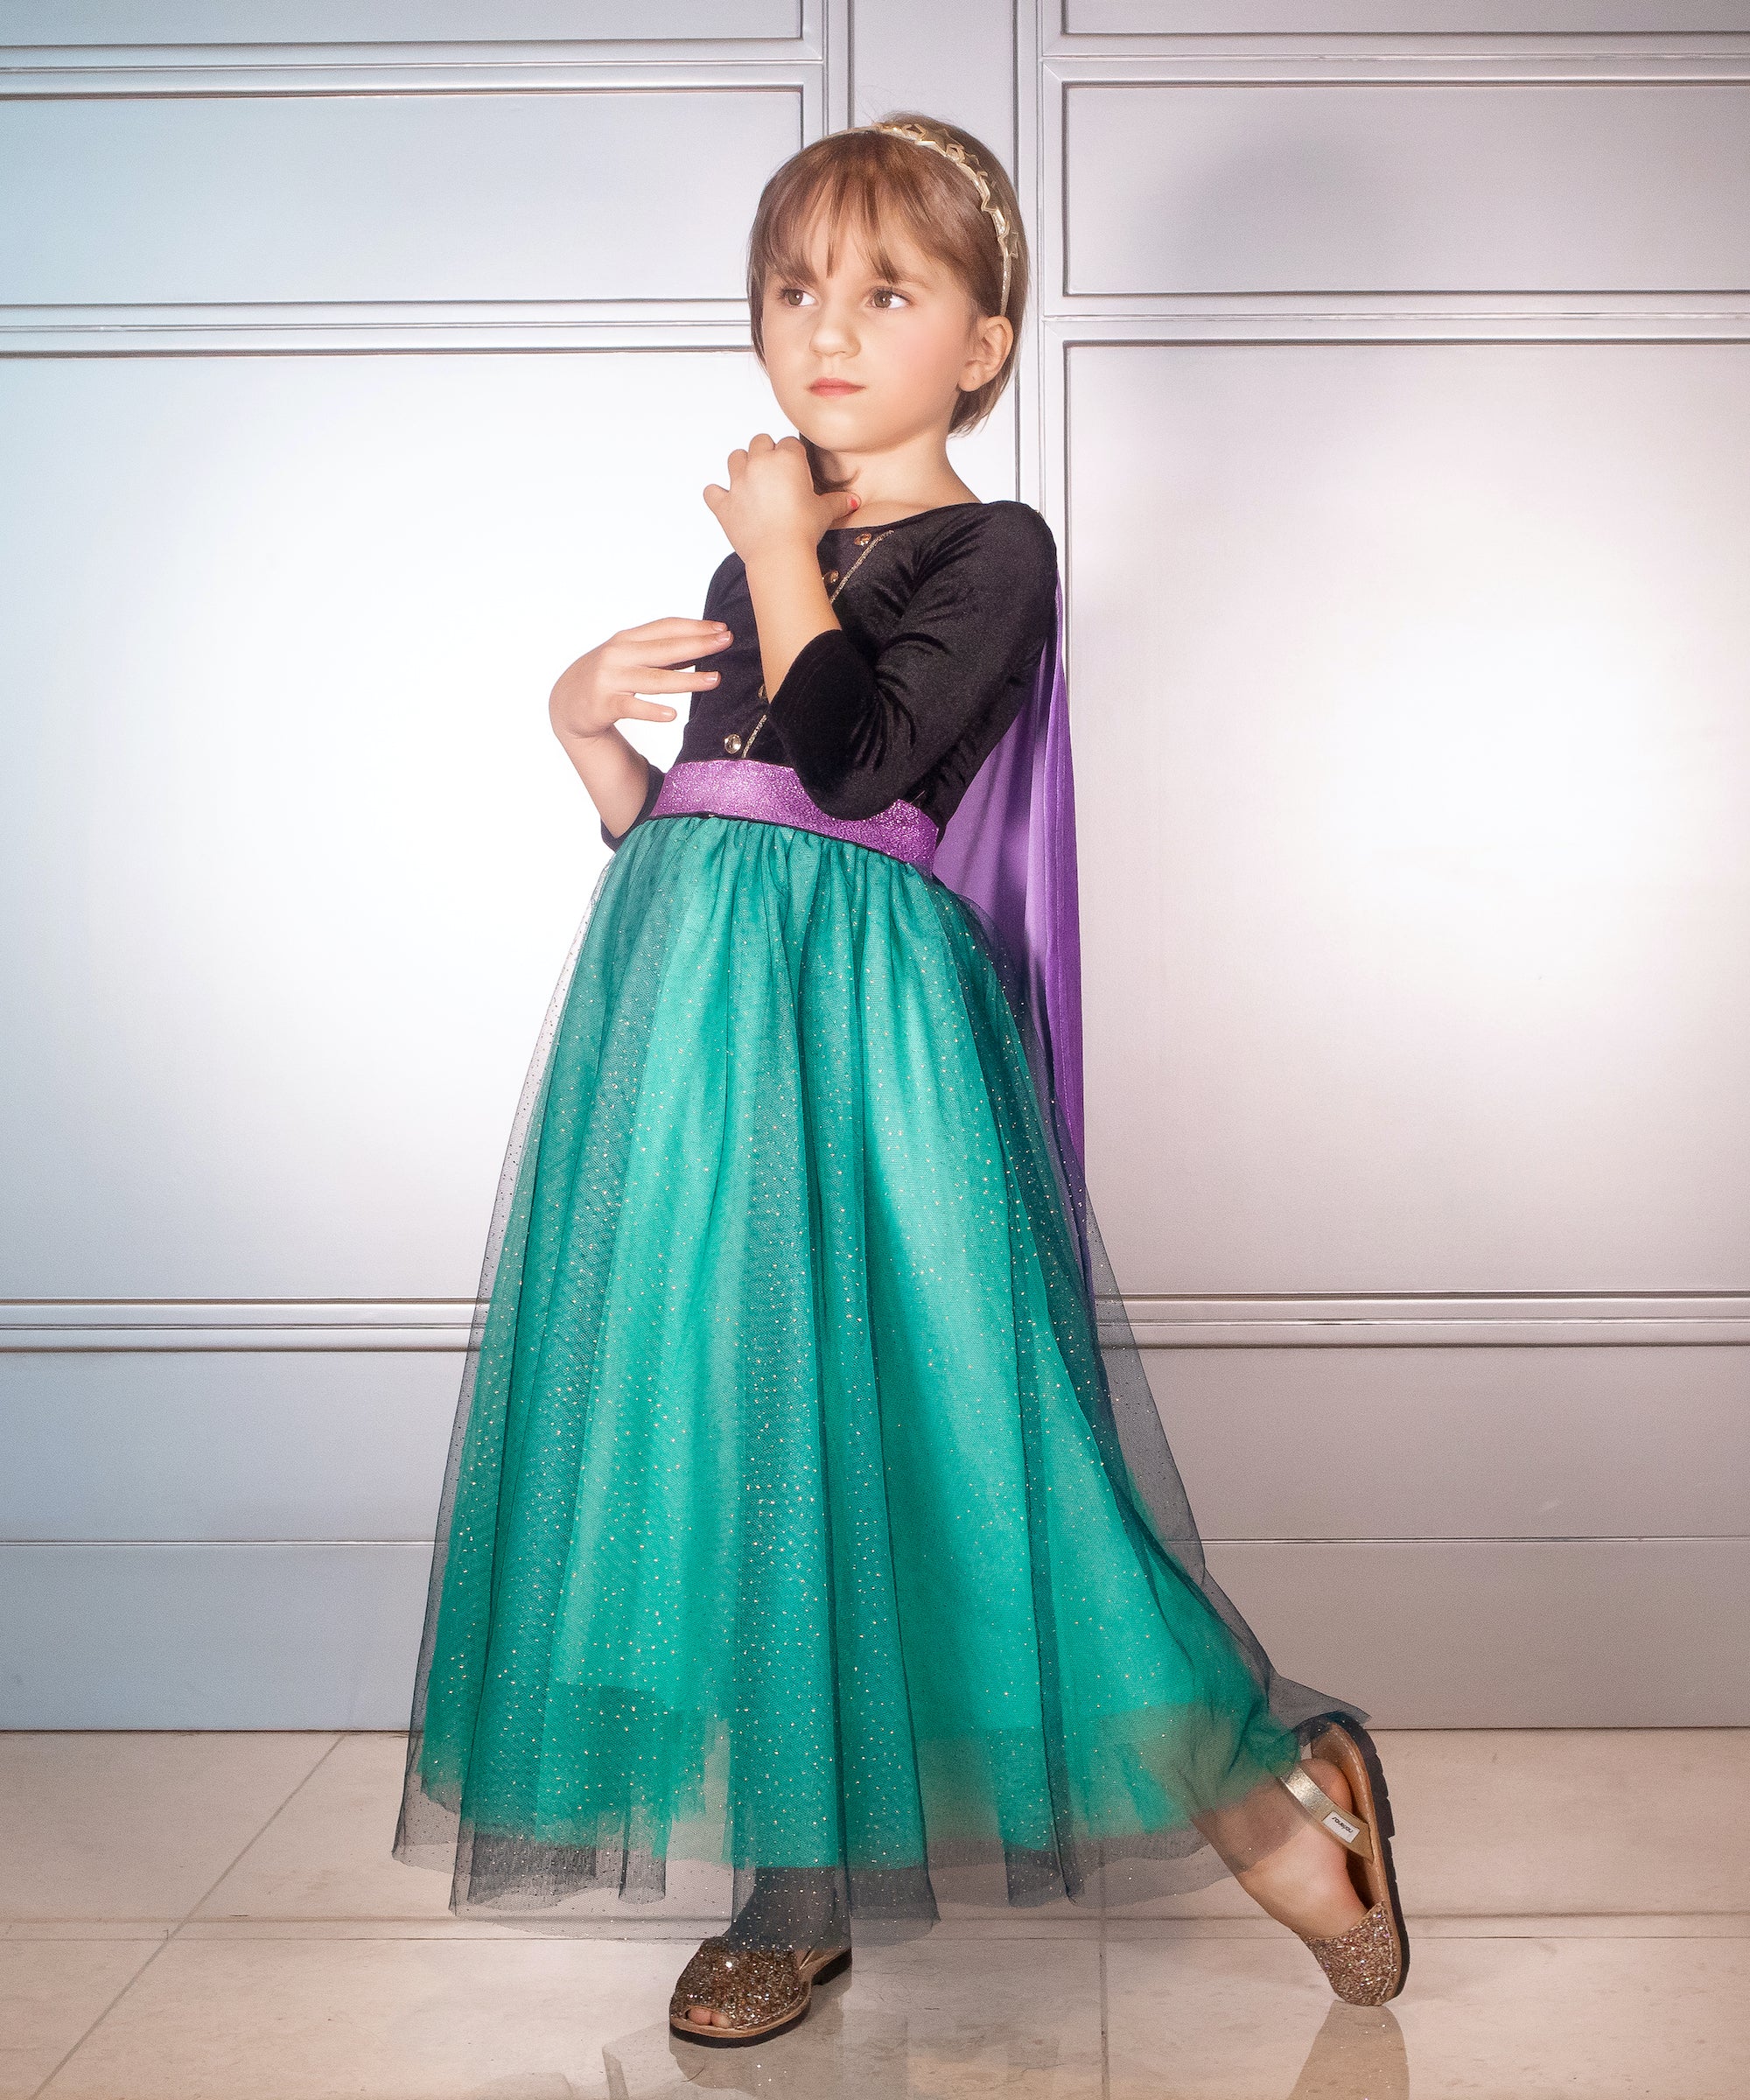 Frozen Elsa Dress, Free Shipping Elsa Dress, Disney Princess Costume, Frozen  Elsa Dress Toddlers, Handmade Frozen Elsa Dress, Kids Cosplay -  Hong  Kong